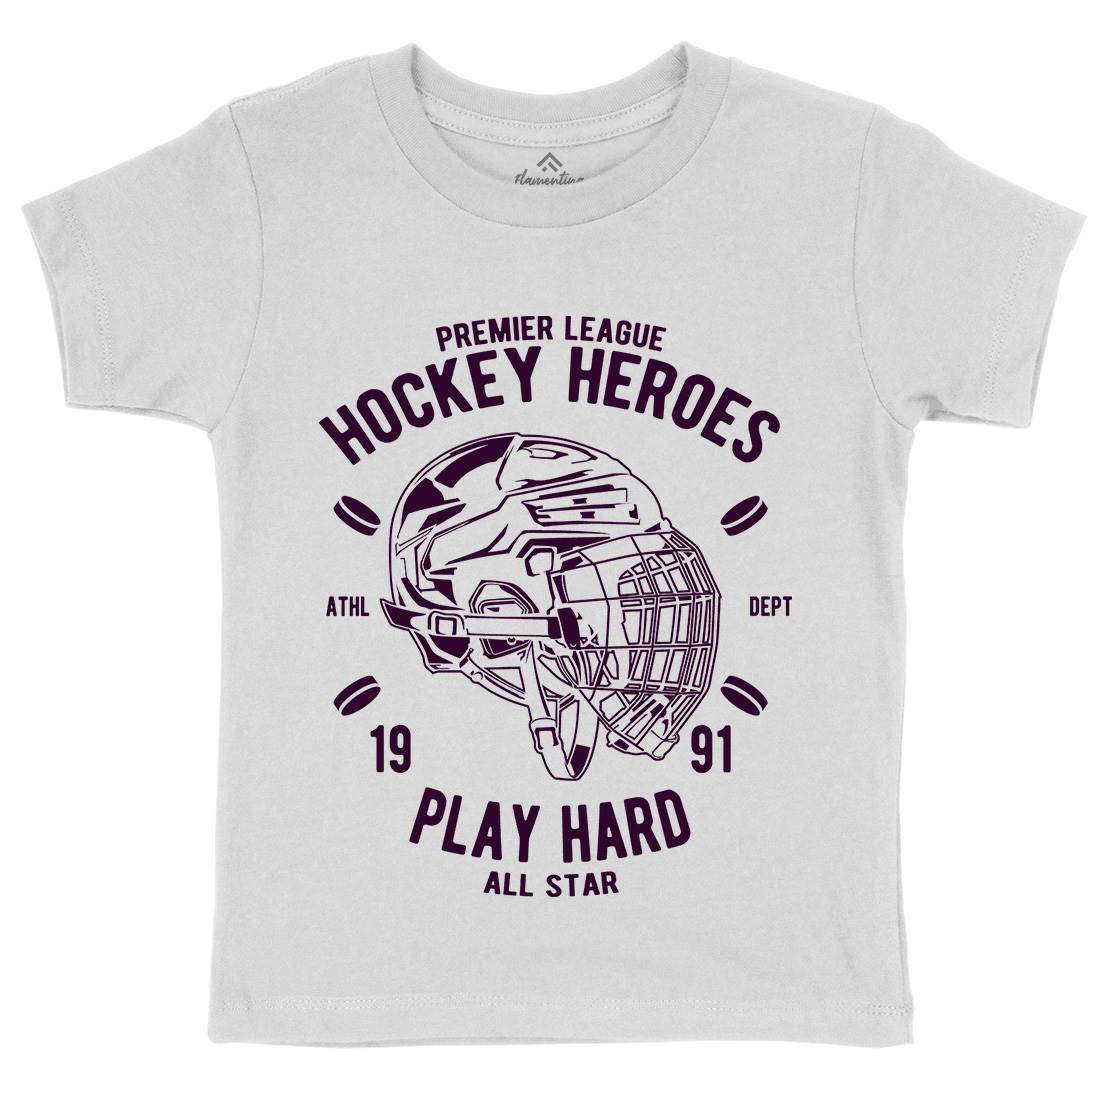 Hockey Heroes Kids Crew Neck T-Shirt Sport A064